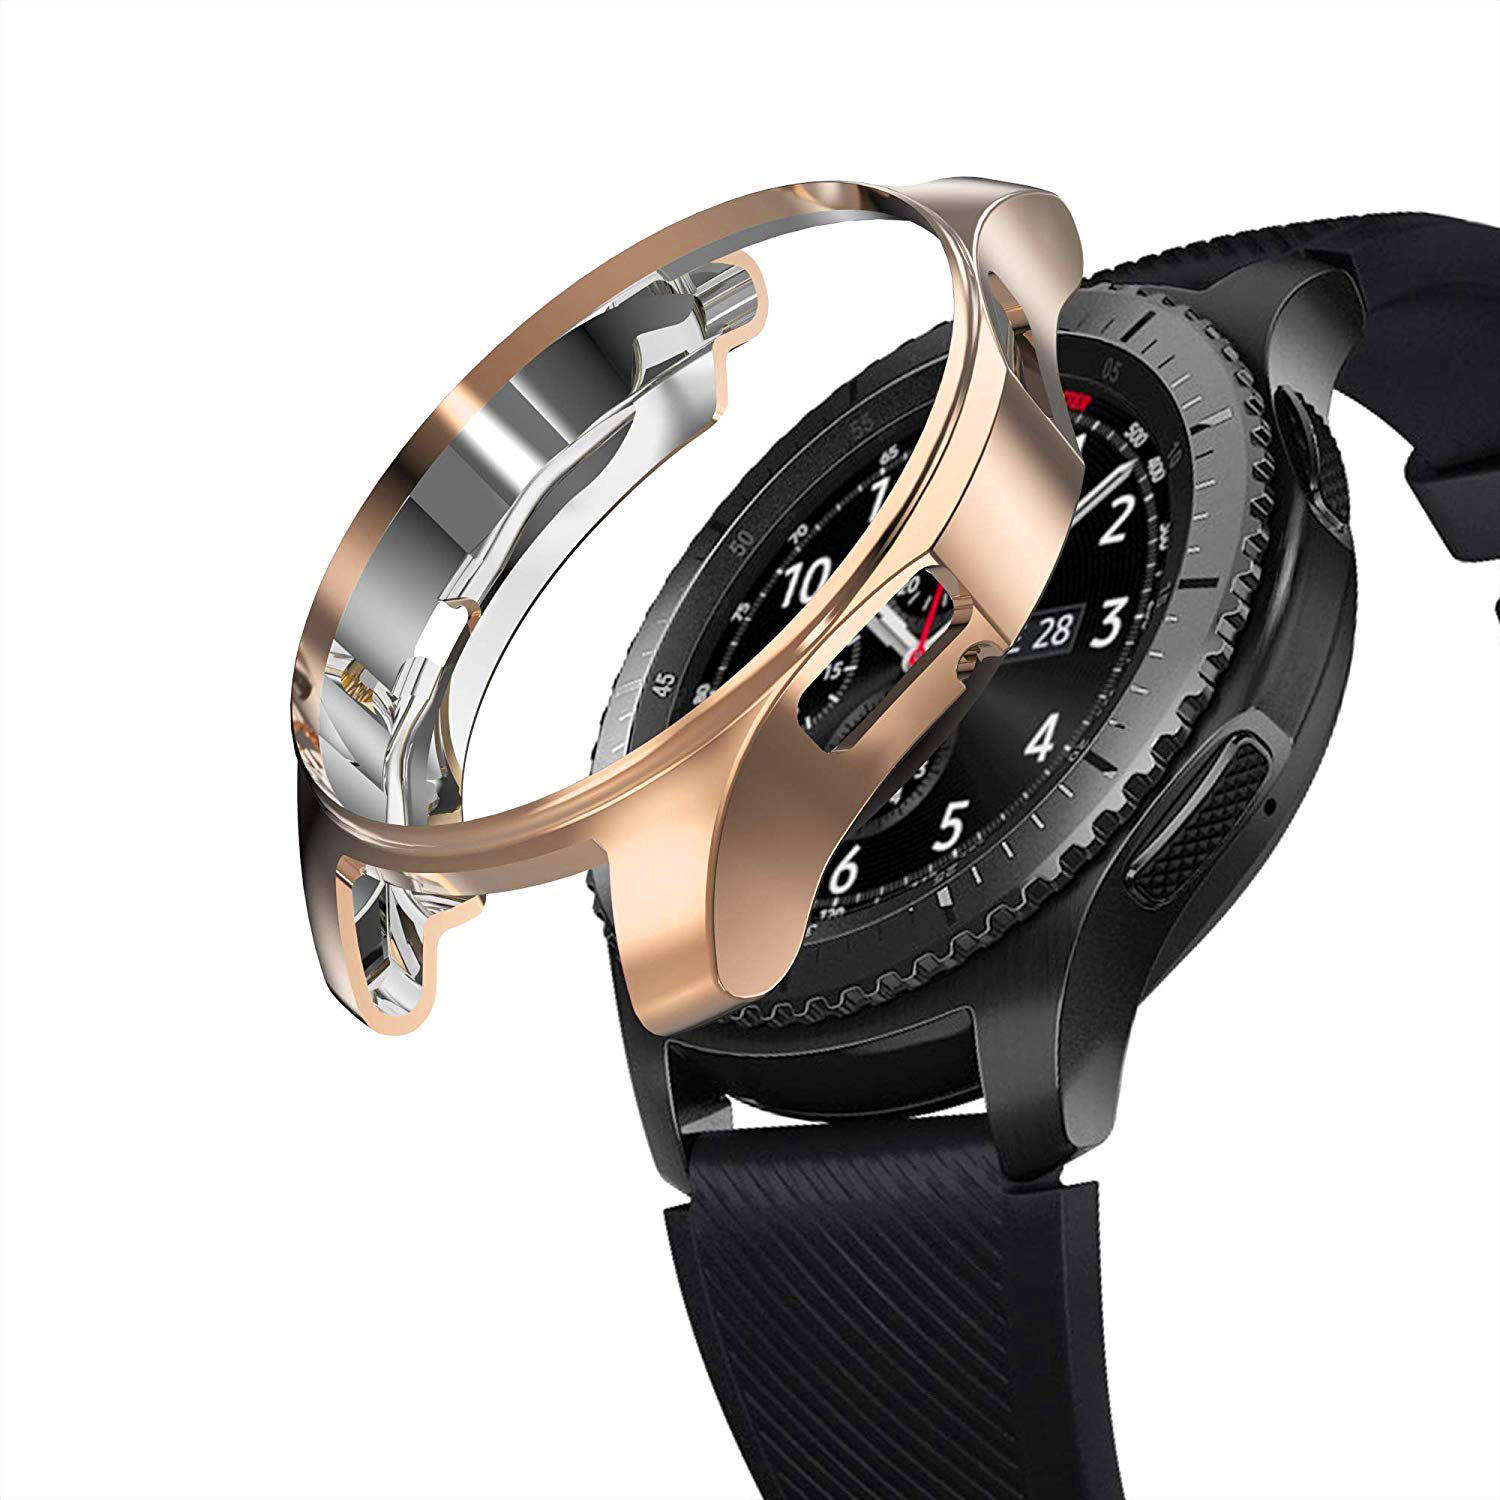 Bakeey Plating Krasbestendig TPU-horlogekap voor Gear S3 / voor Samsung Galaxy Watch 42 mm / 46 mm